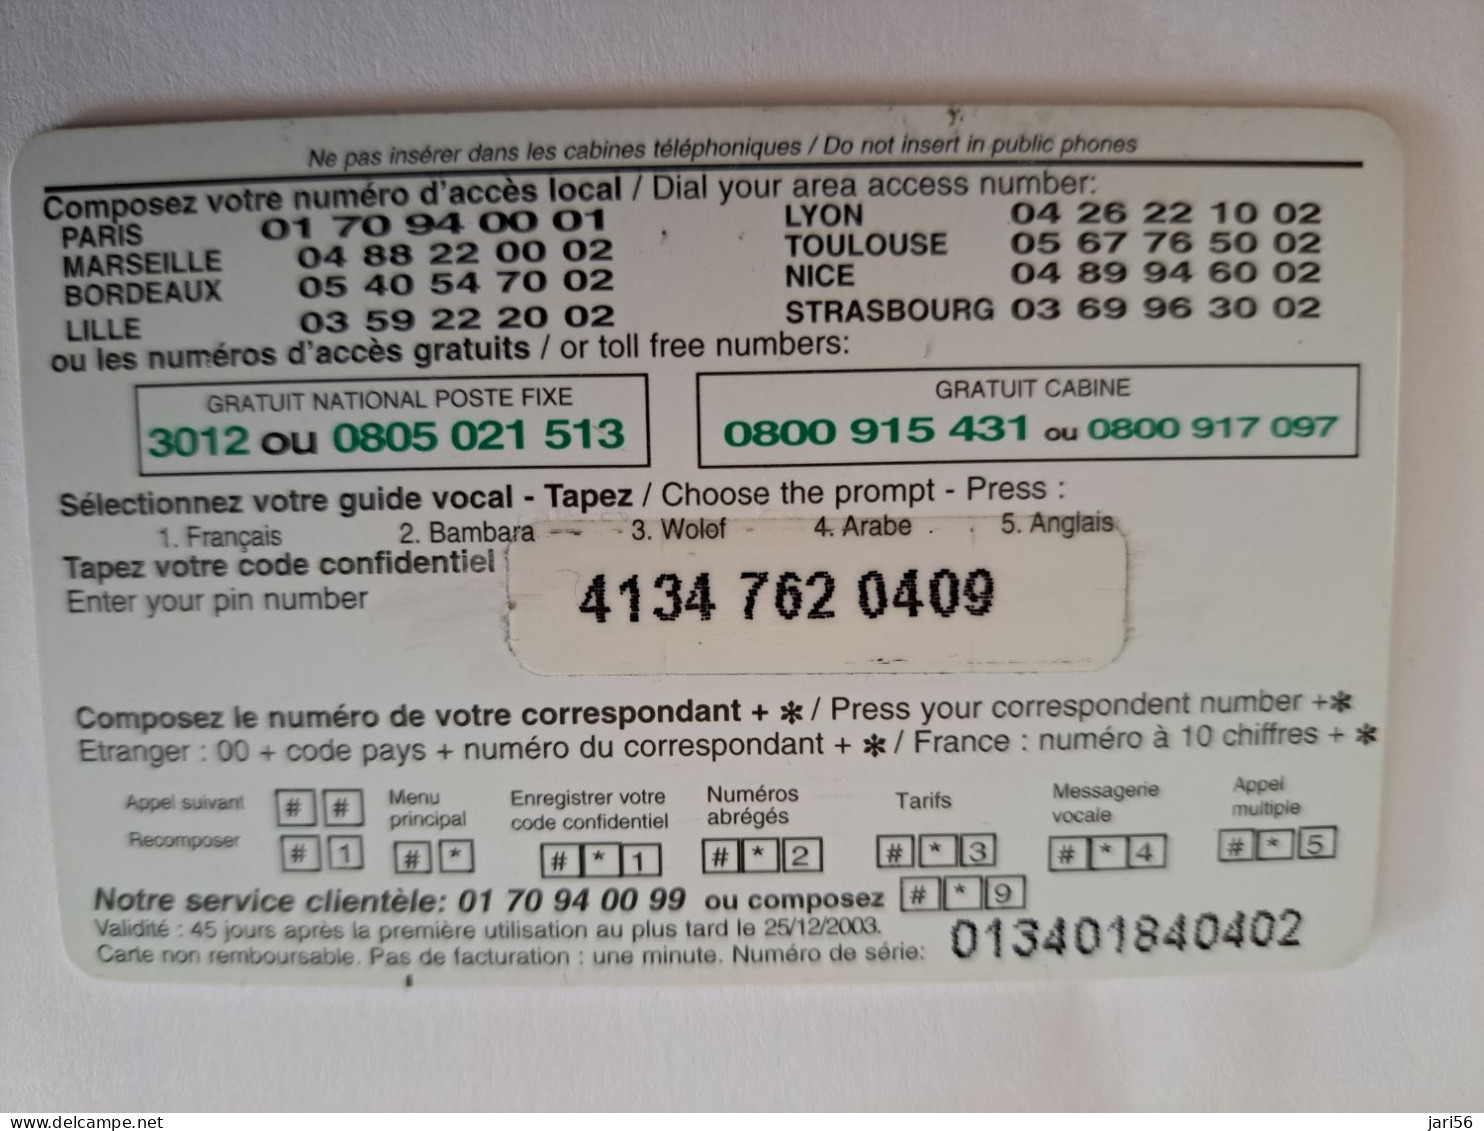 FRANCE/FRANKRIJK  AFRIKA CALL/ LION/LYON/  /  100 FRANC  PREPAID  USED    ** 13804** - Nachladekarten (Handy/SIM)